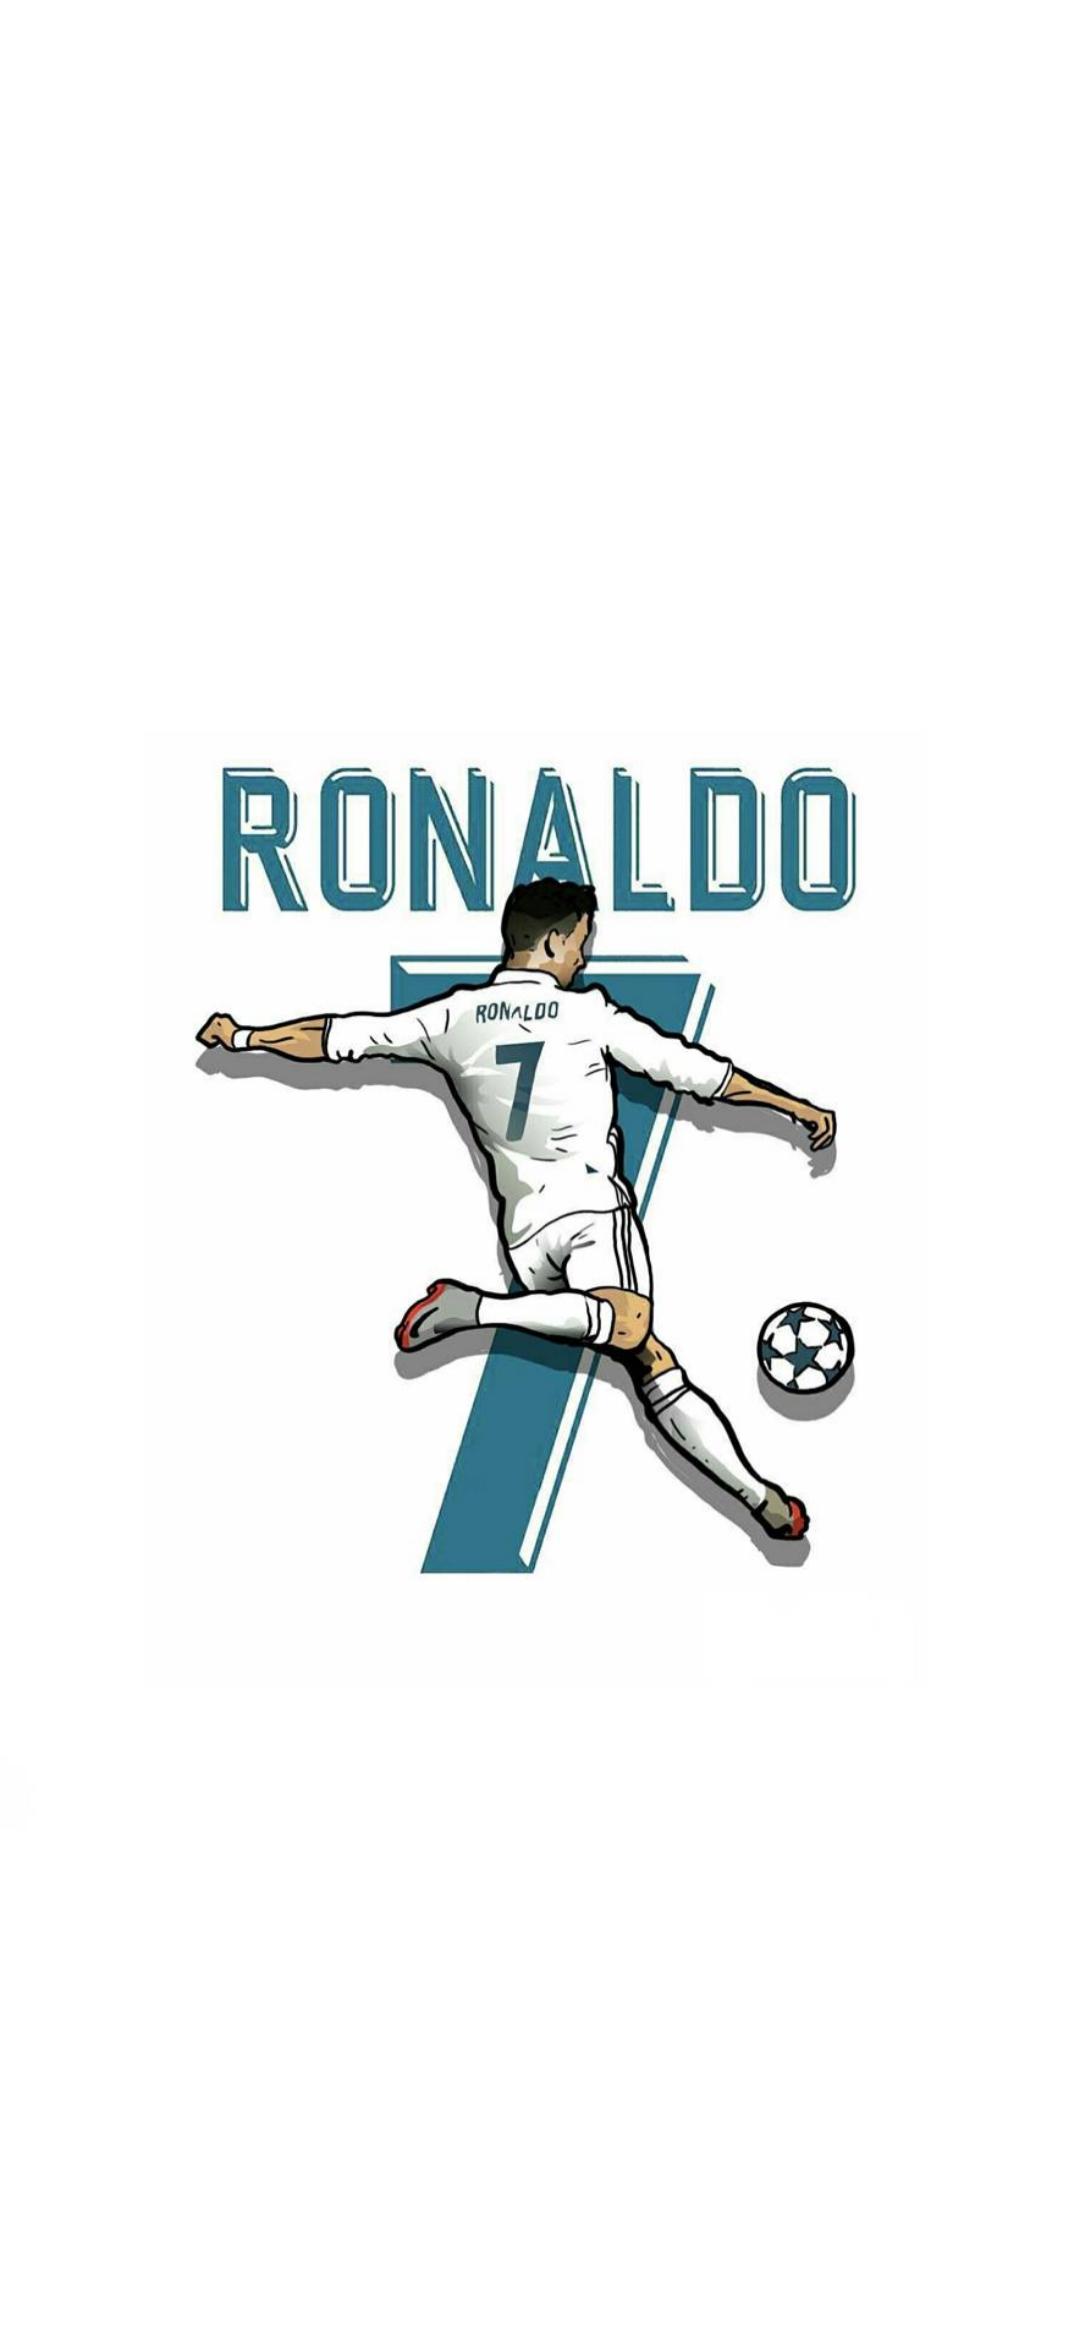 Ronaldo Cartoon Iphone Wallpapers Top Free Ronaldo Cartoon Iphone Backgrounds Wallpaperaccess 3391